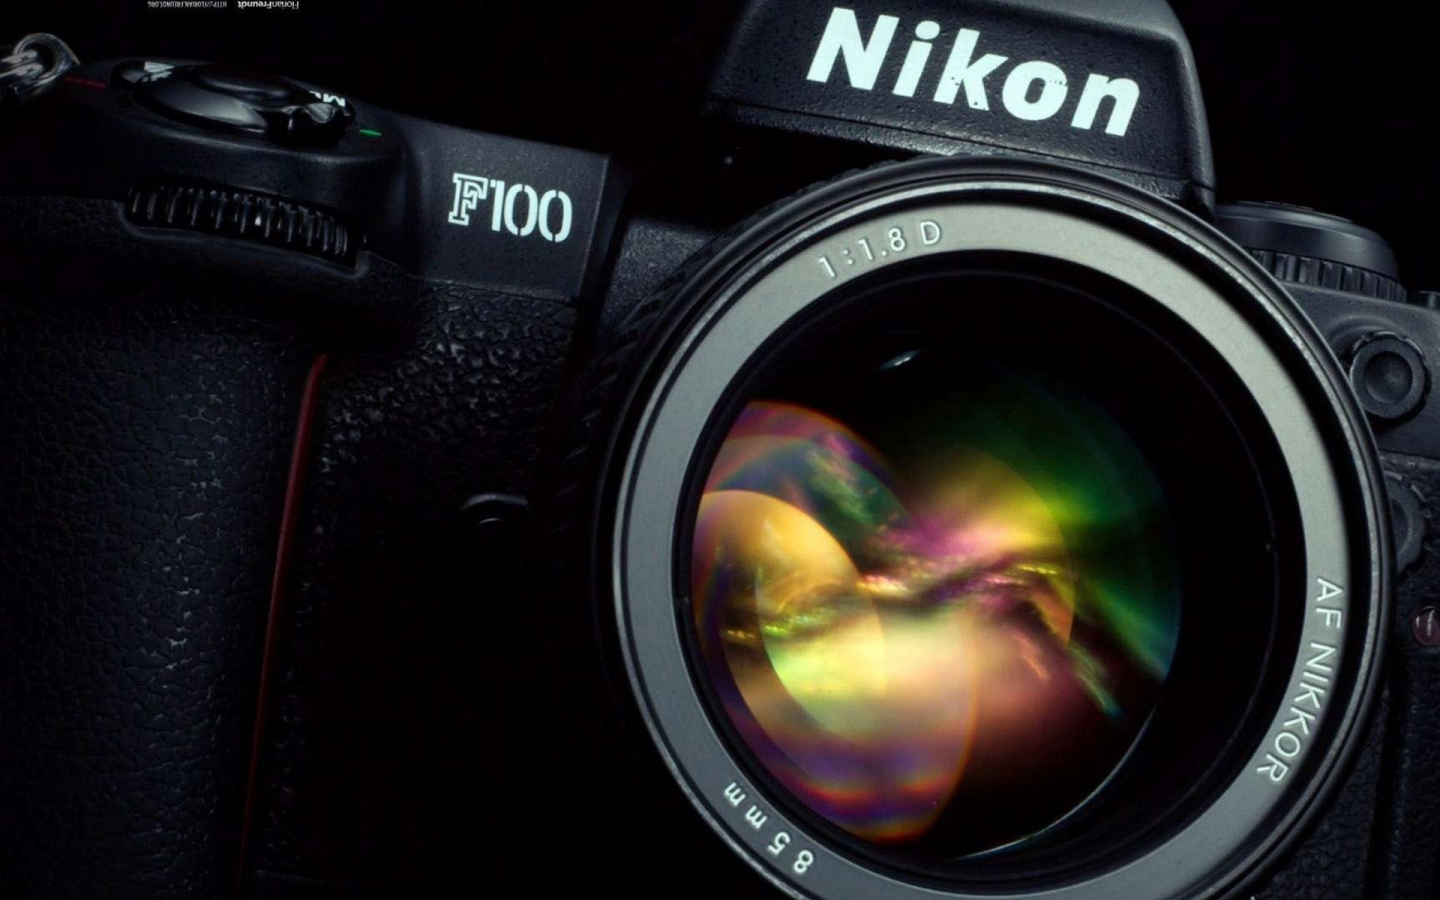 Nikon F100 for 1440 x 900 widescreen resolution